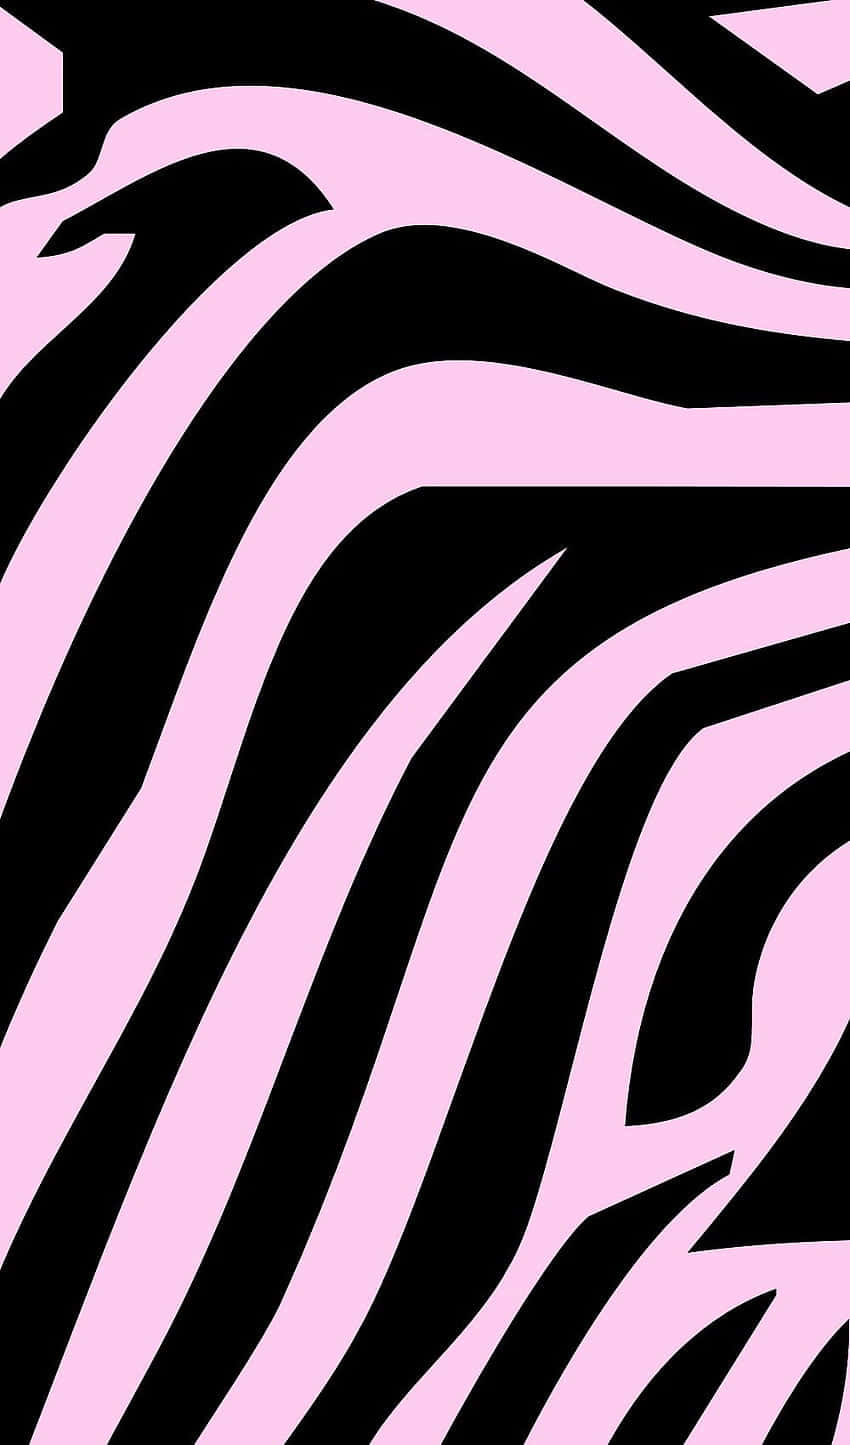 black and pink zebra print wallpaper